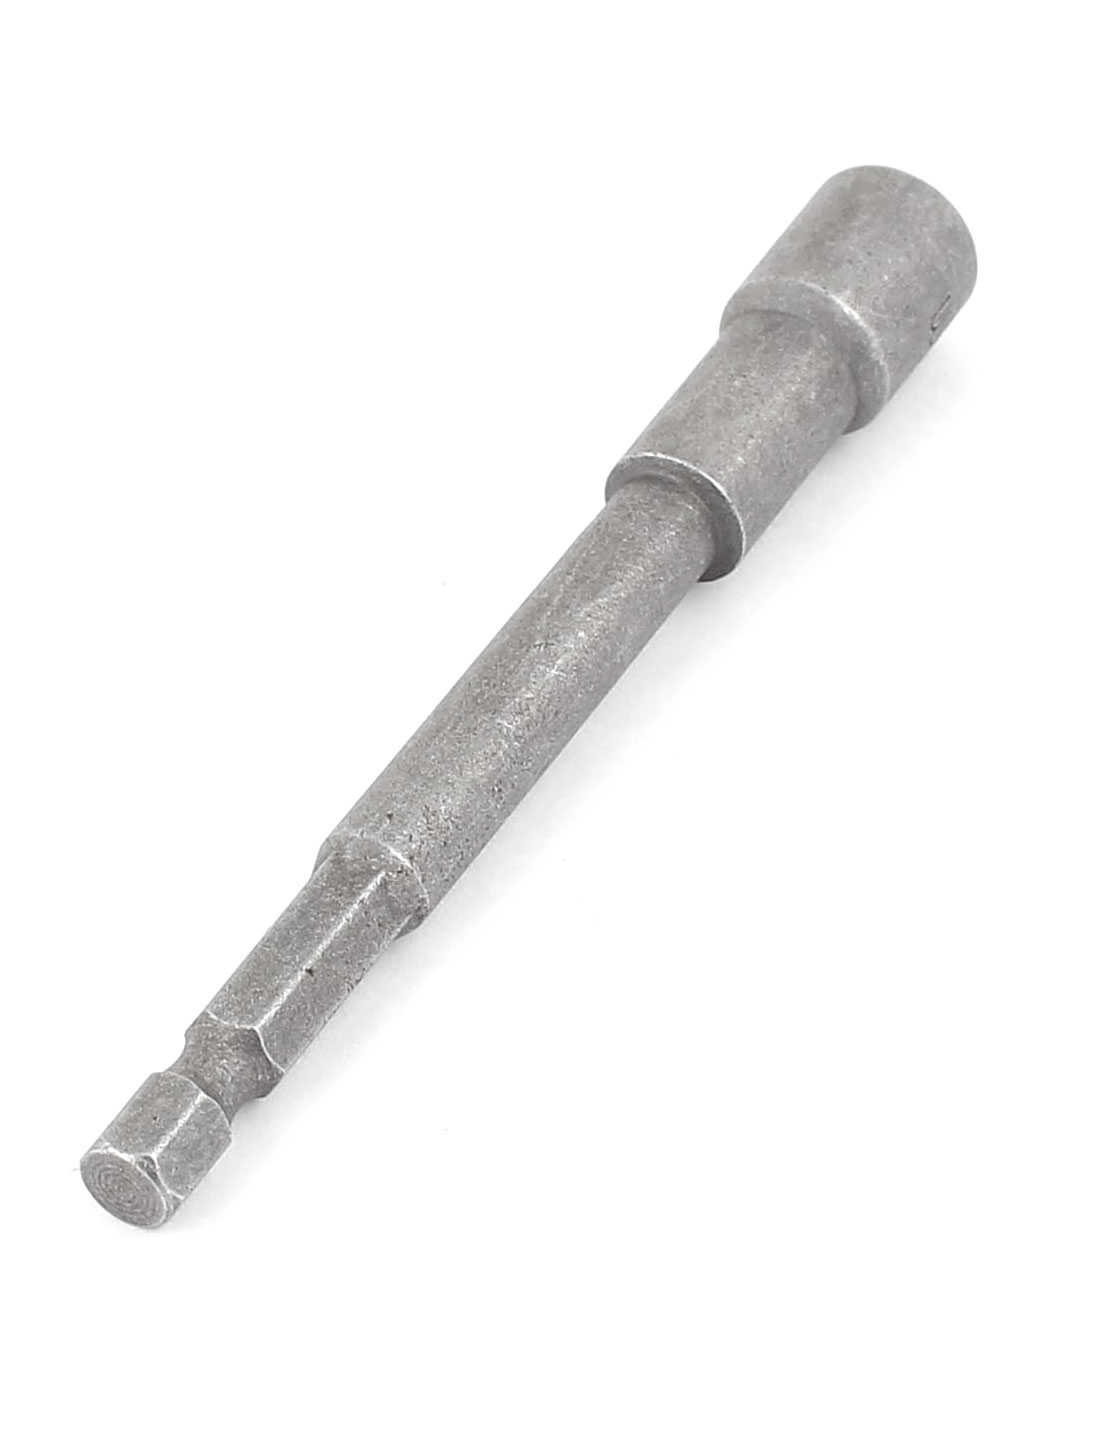 100mm Length 1/4' Shank 8mm Hex Socket Magnetic Nut Driver Bit Adapter Gray